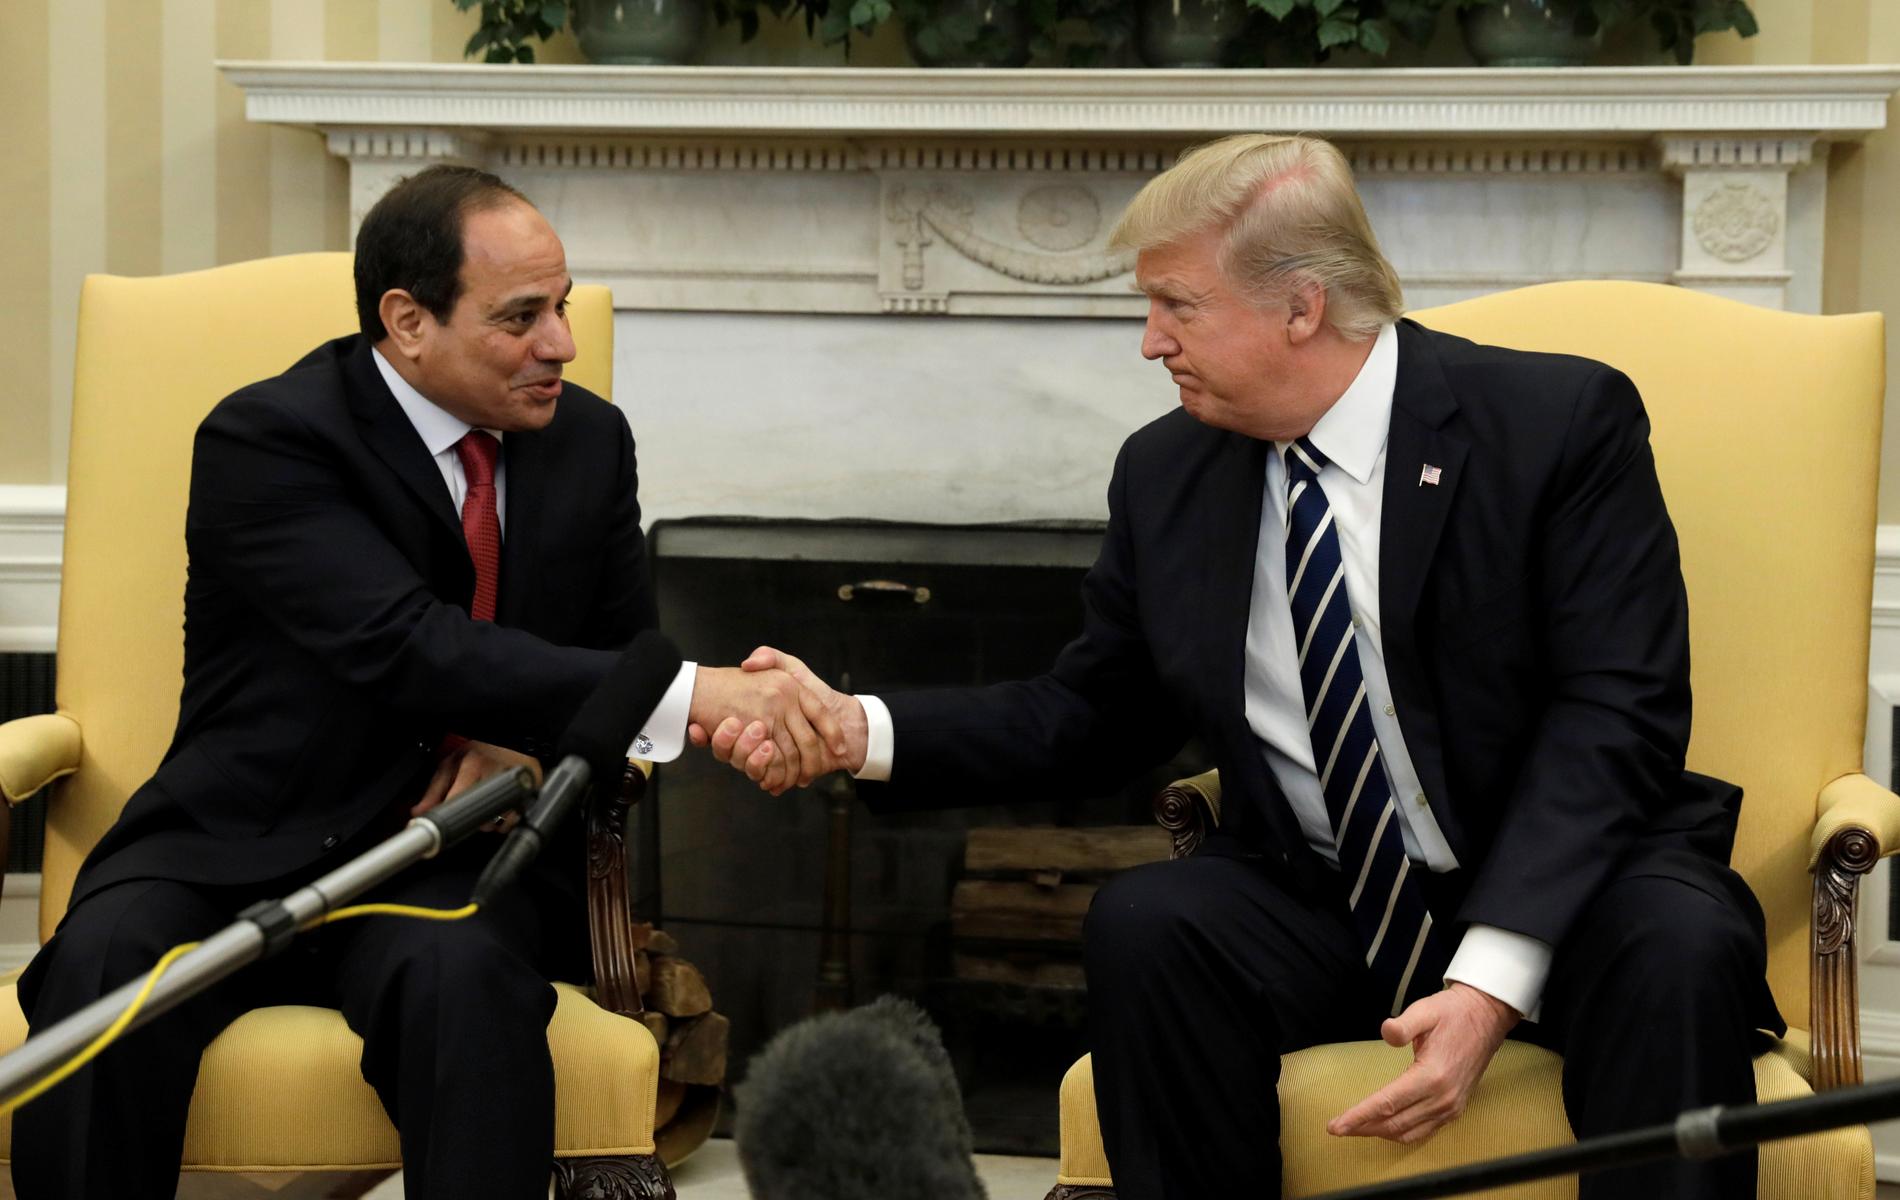 Egyptens ledare Abd al-Fattah al-Sisi möter Donald Trump i Vita husets ovala rum